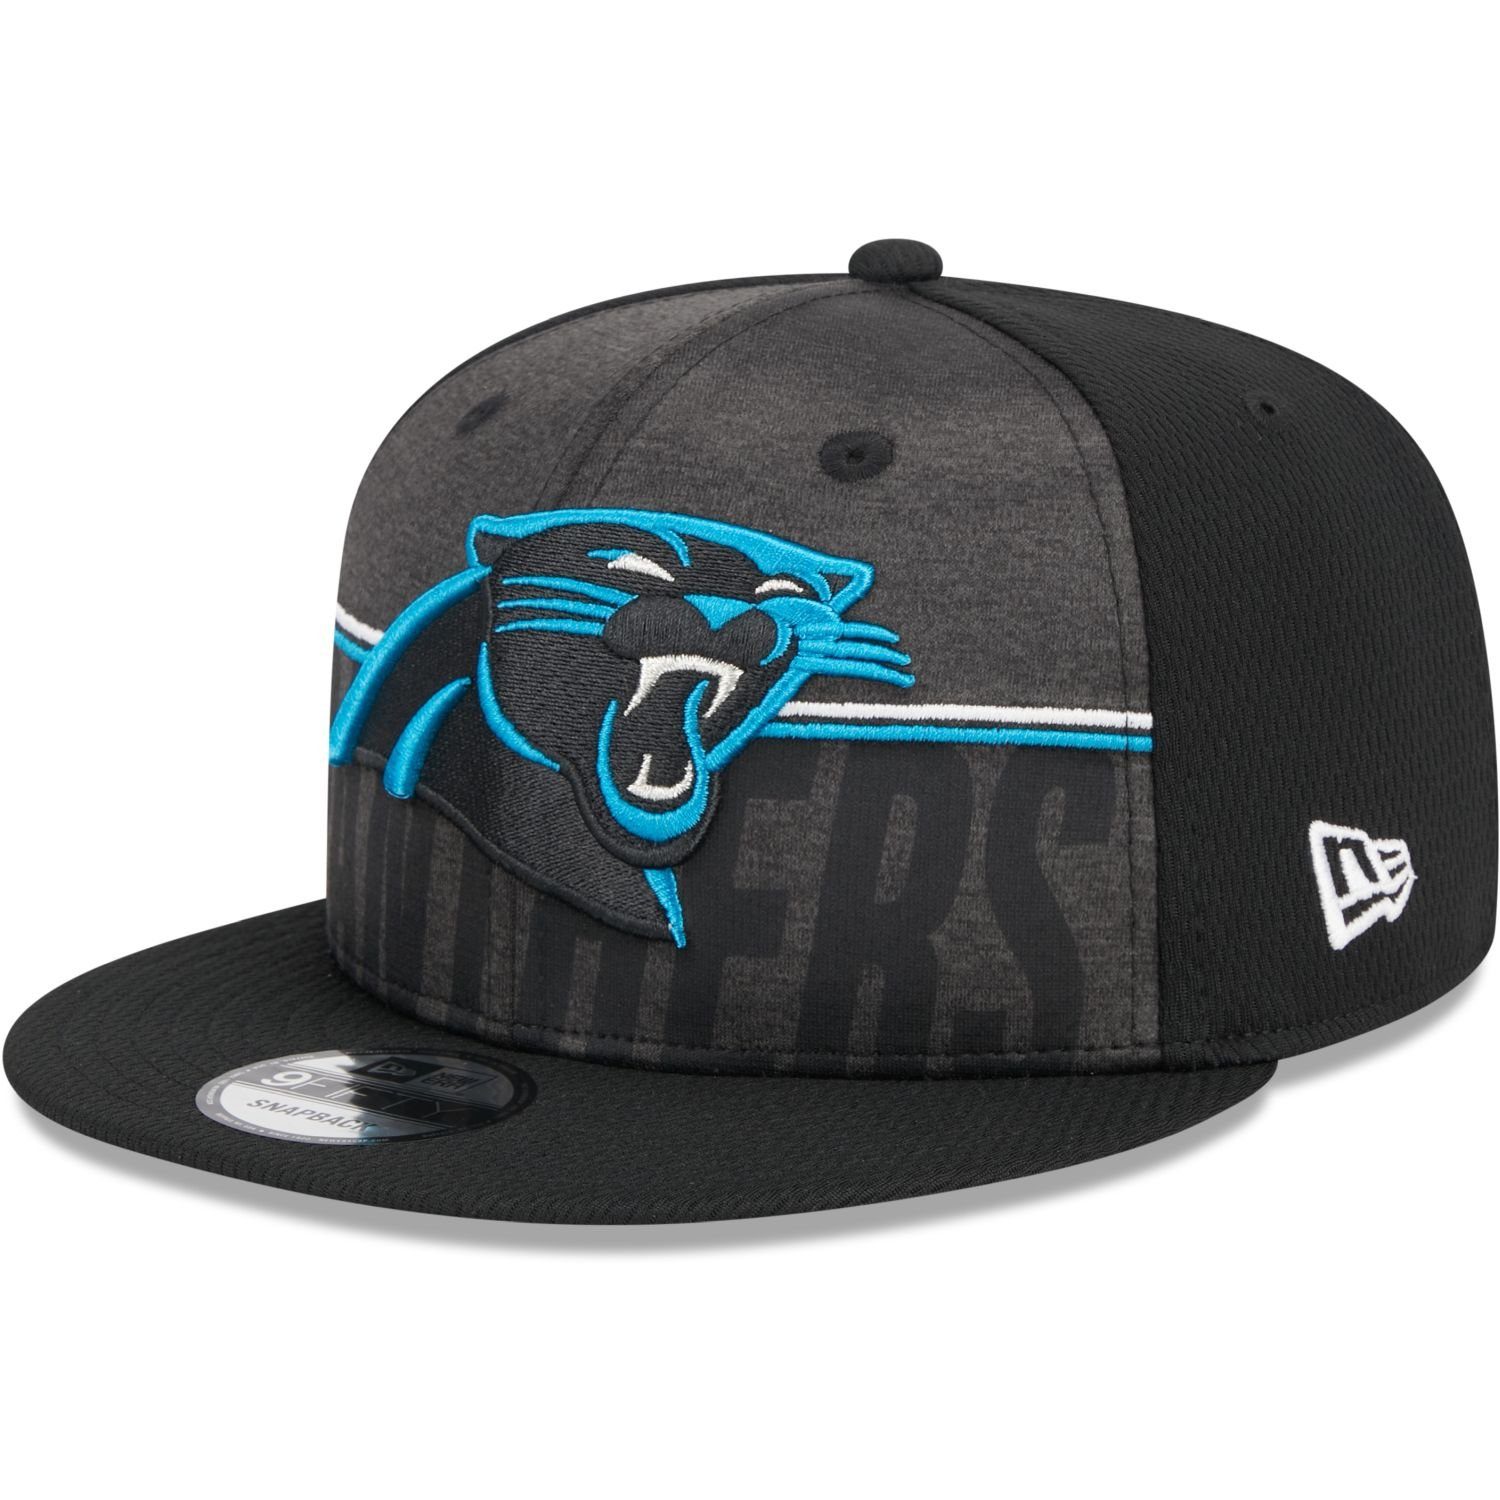 New Era Snapback Cap 9FIFTY TRAINING Carolina Panthers